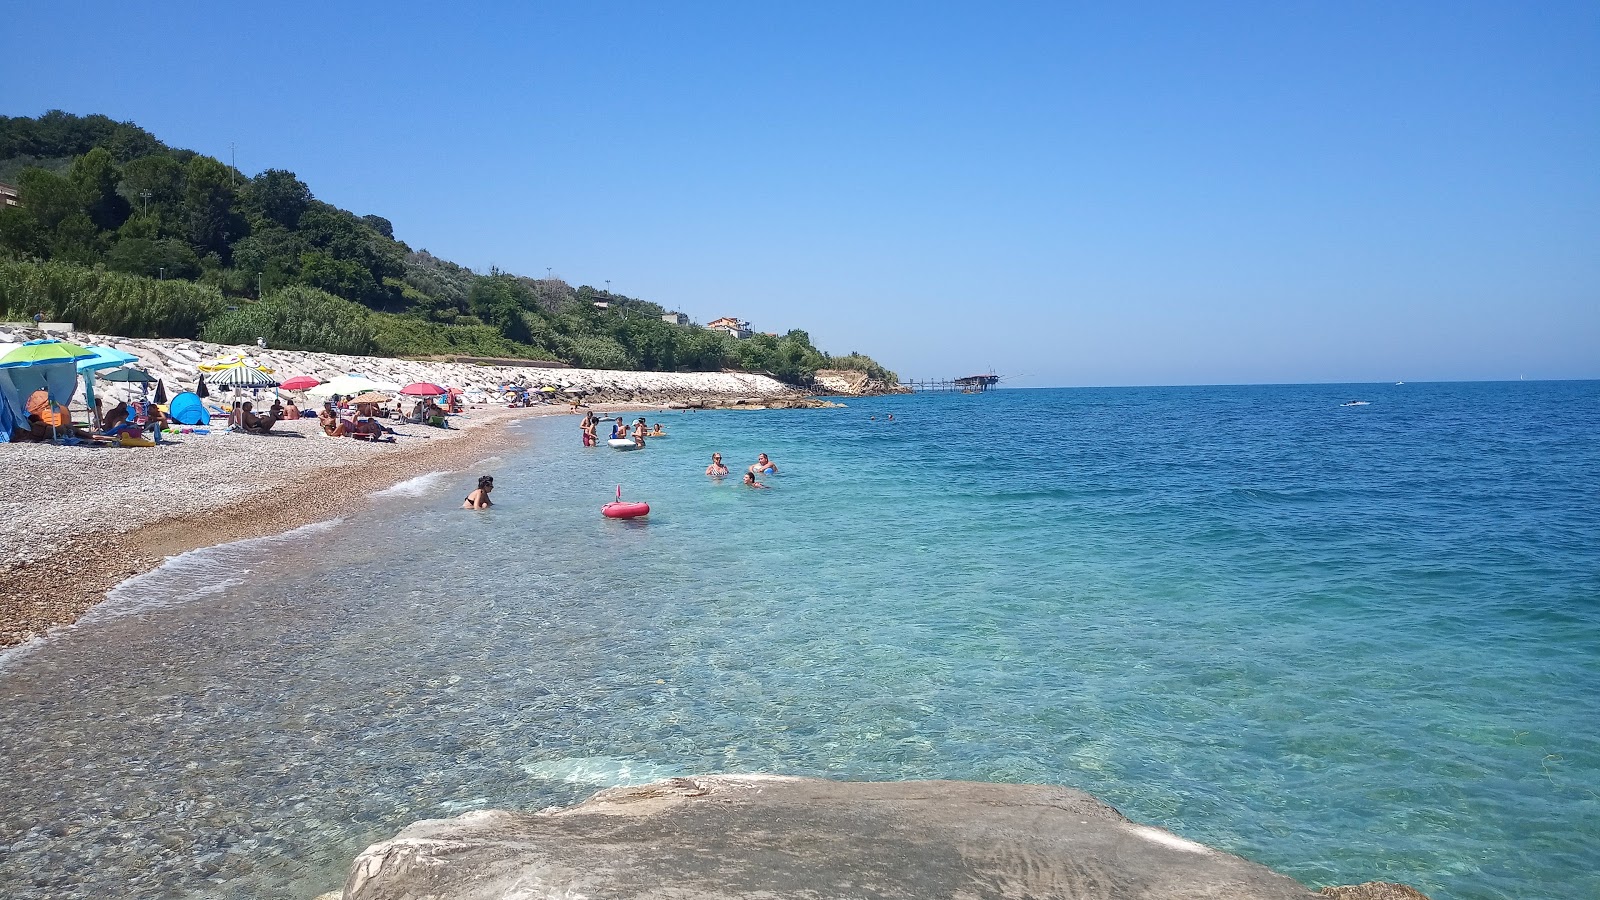 Spiaggia della Foce'in fotoğrafı imkanlar alanı